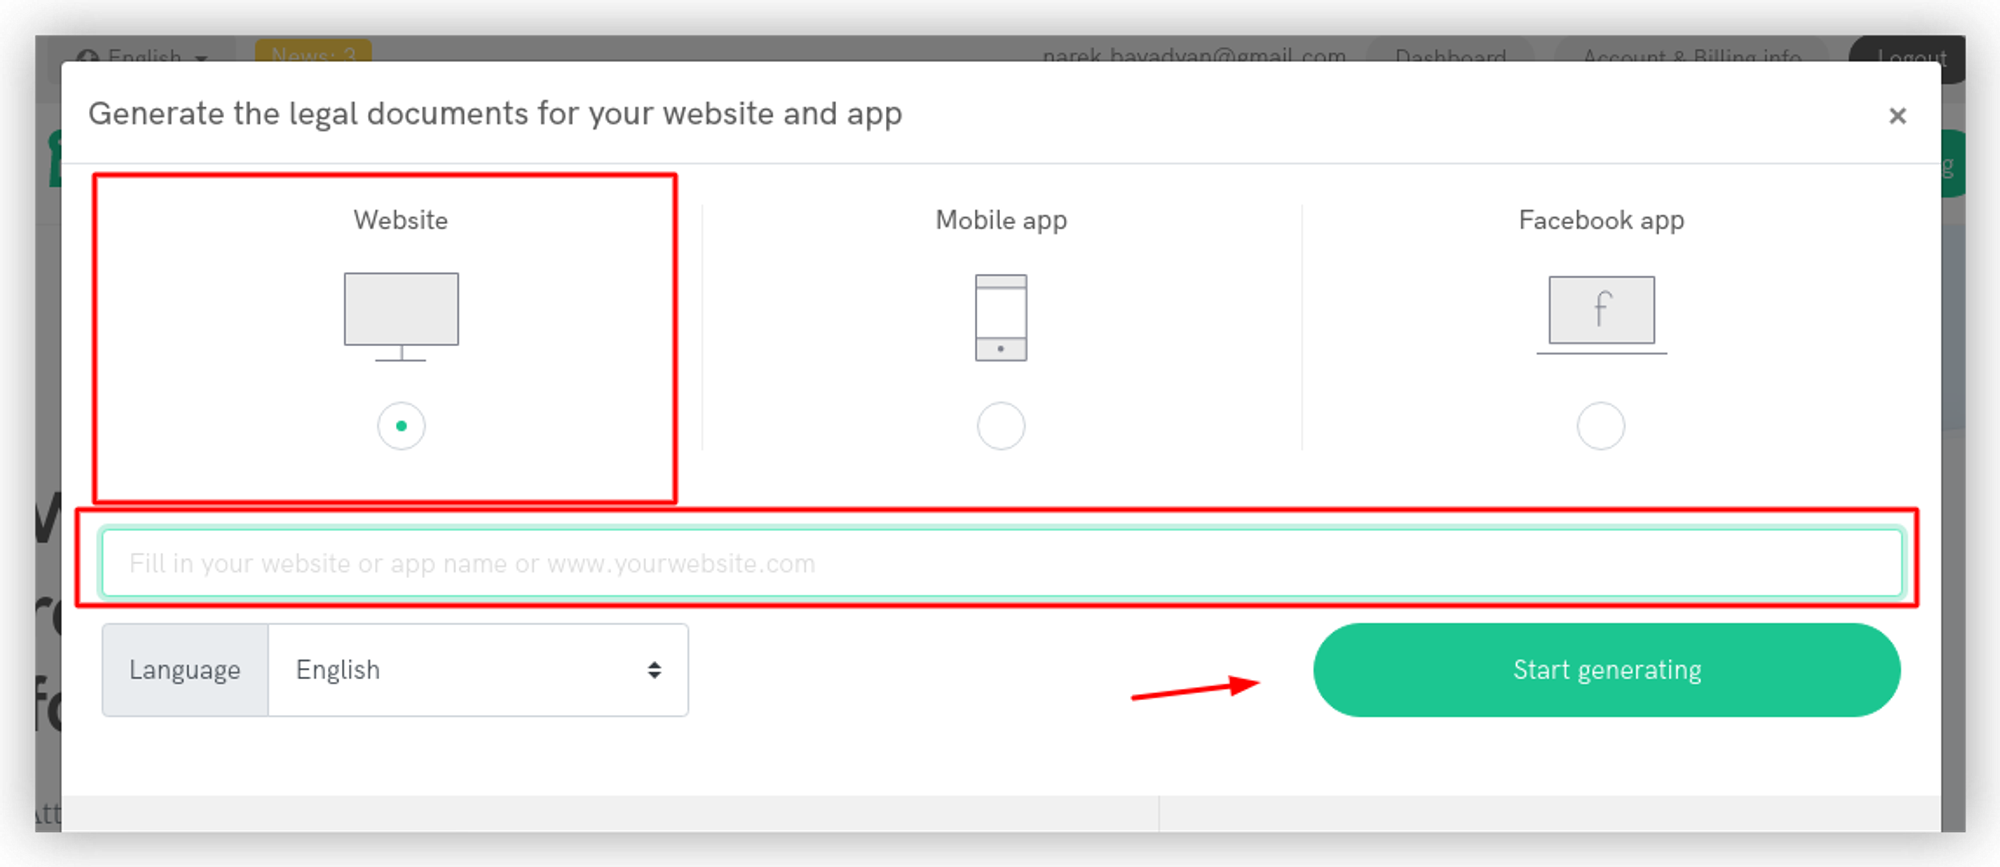 Choosing the “Website” option